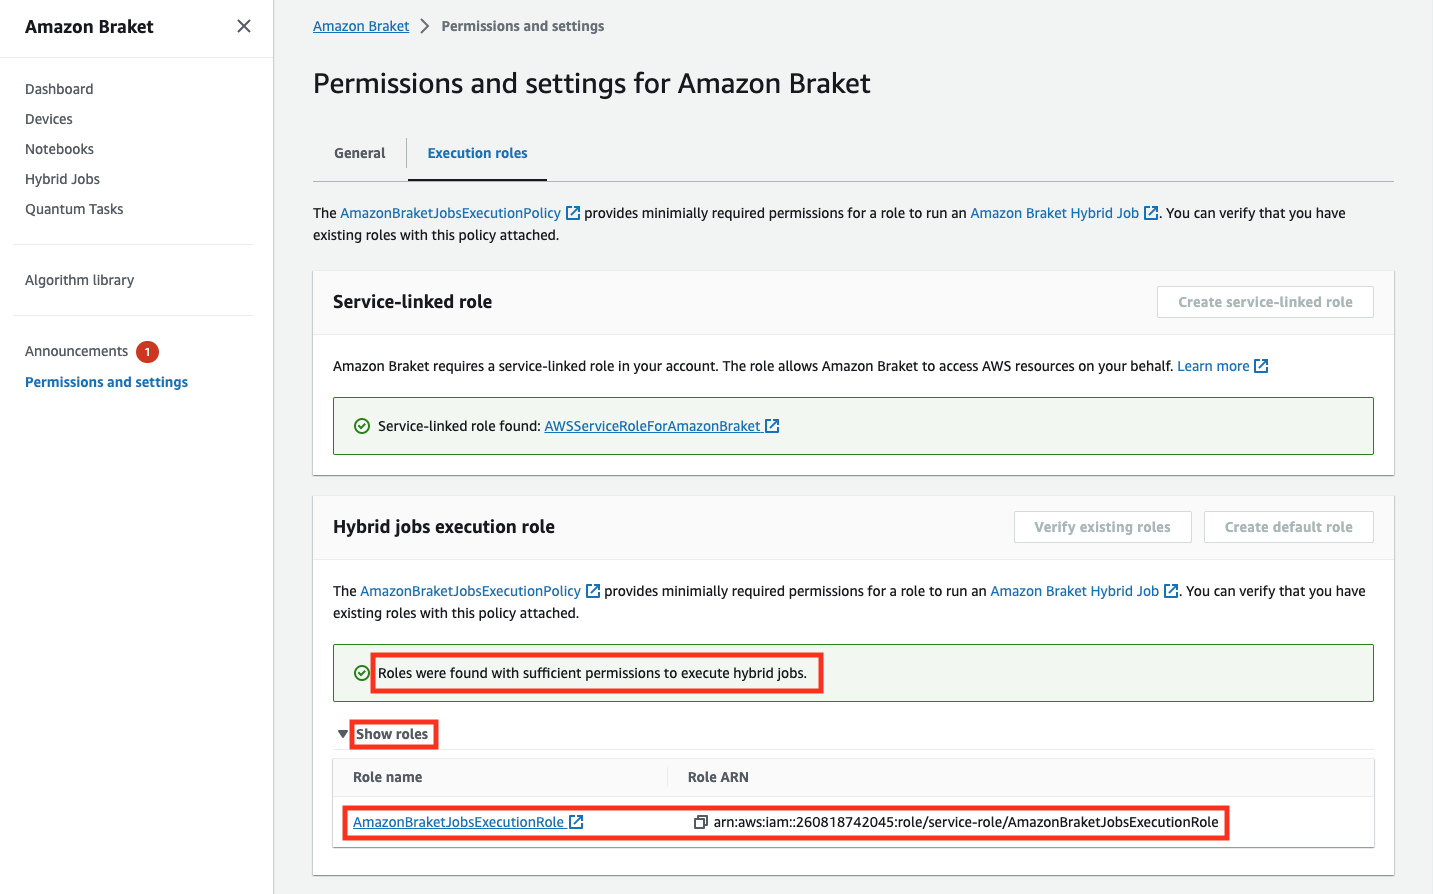 Amazon Braket 許可和設定畫面顯示找到的服務連結角色，以及具有足夠許可執行混合任務的現有角色。